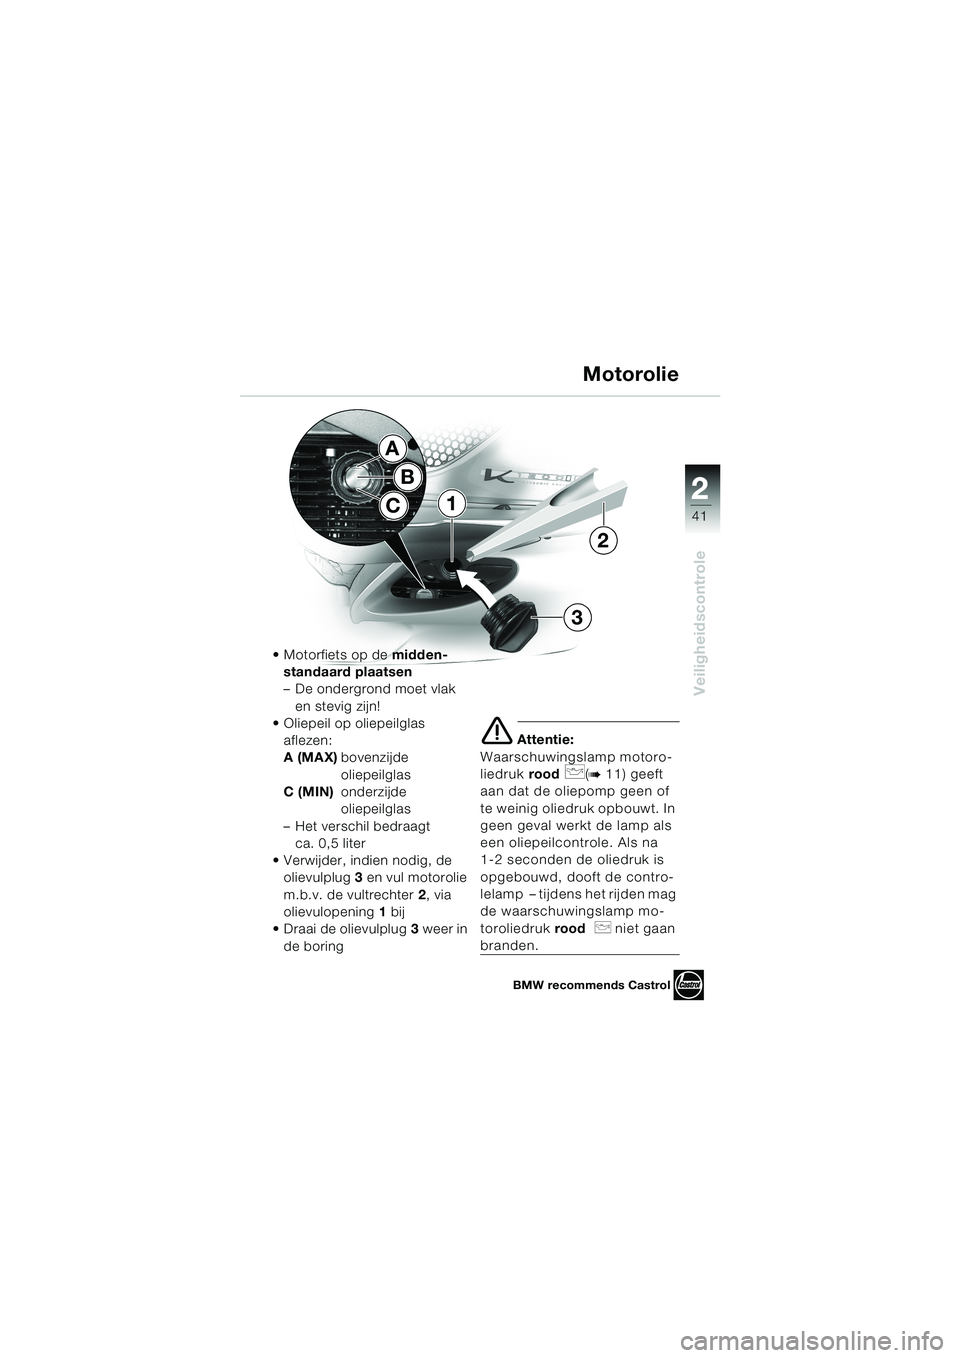 BMW MOTORRAD K 1200 LT 2002  Handleiding (in Dutch) 2 2
41
Veiligheidscontrole
Motorolie
Motorfiets op de midden-
standaard plaatsen
–De ondergrond moet vlak 
en stevig zijn!
Oliepeil op oliepeilglas 
aflezen:
A (MAX)bovenzijde 
oliepeilglas
C (MIN